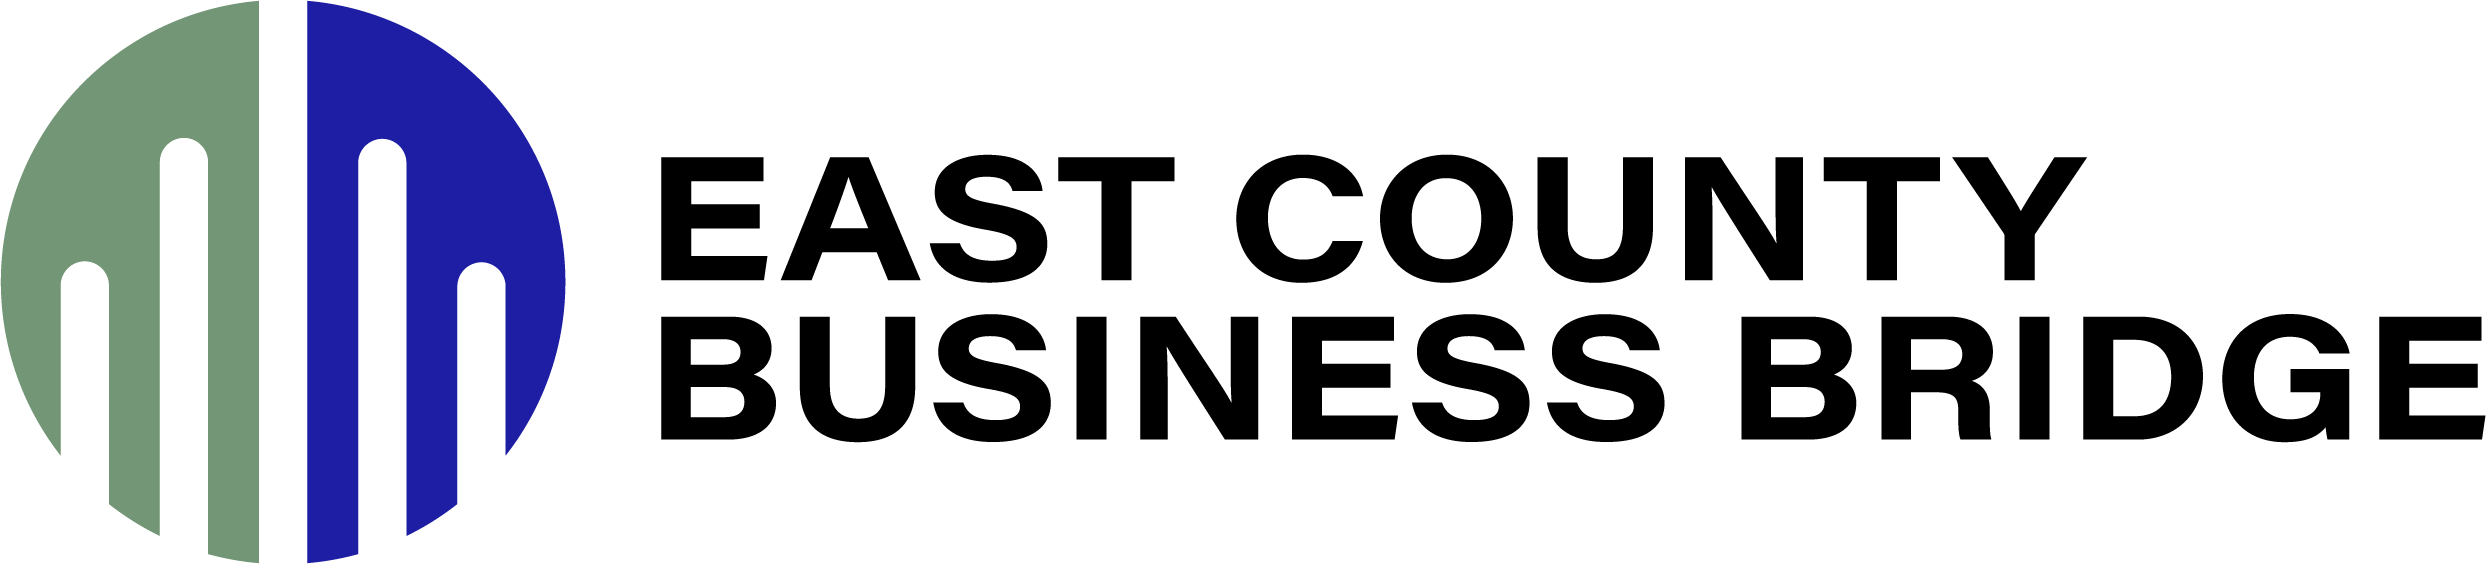 ECCB logo horizontal_bluegreen